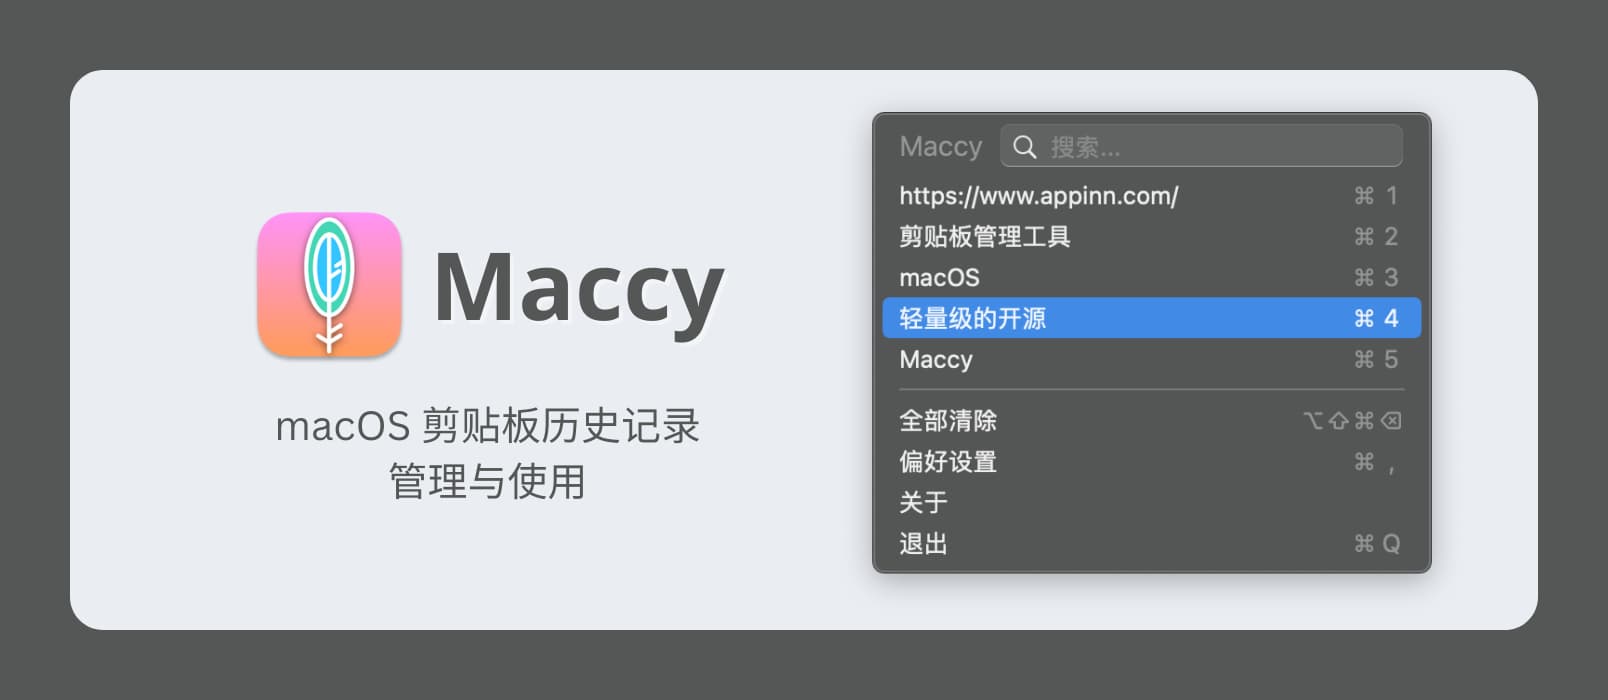 Maccy - macOS 剪贴板历史记录的管理与使用